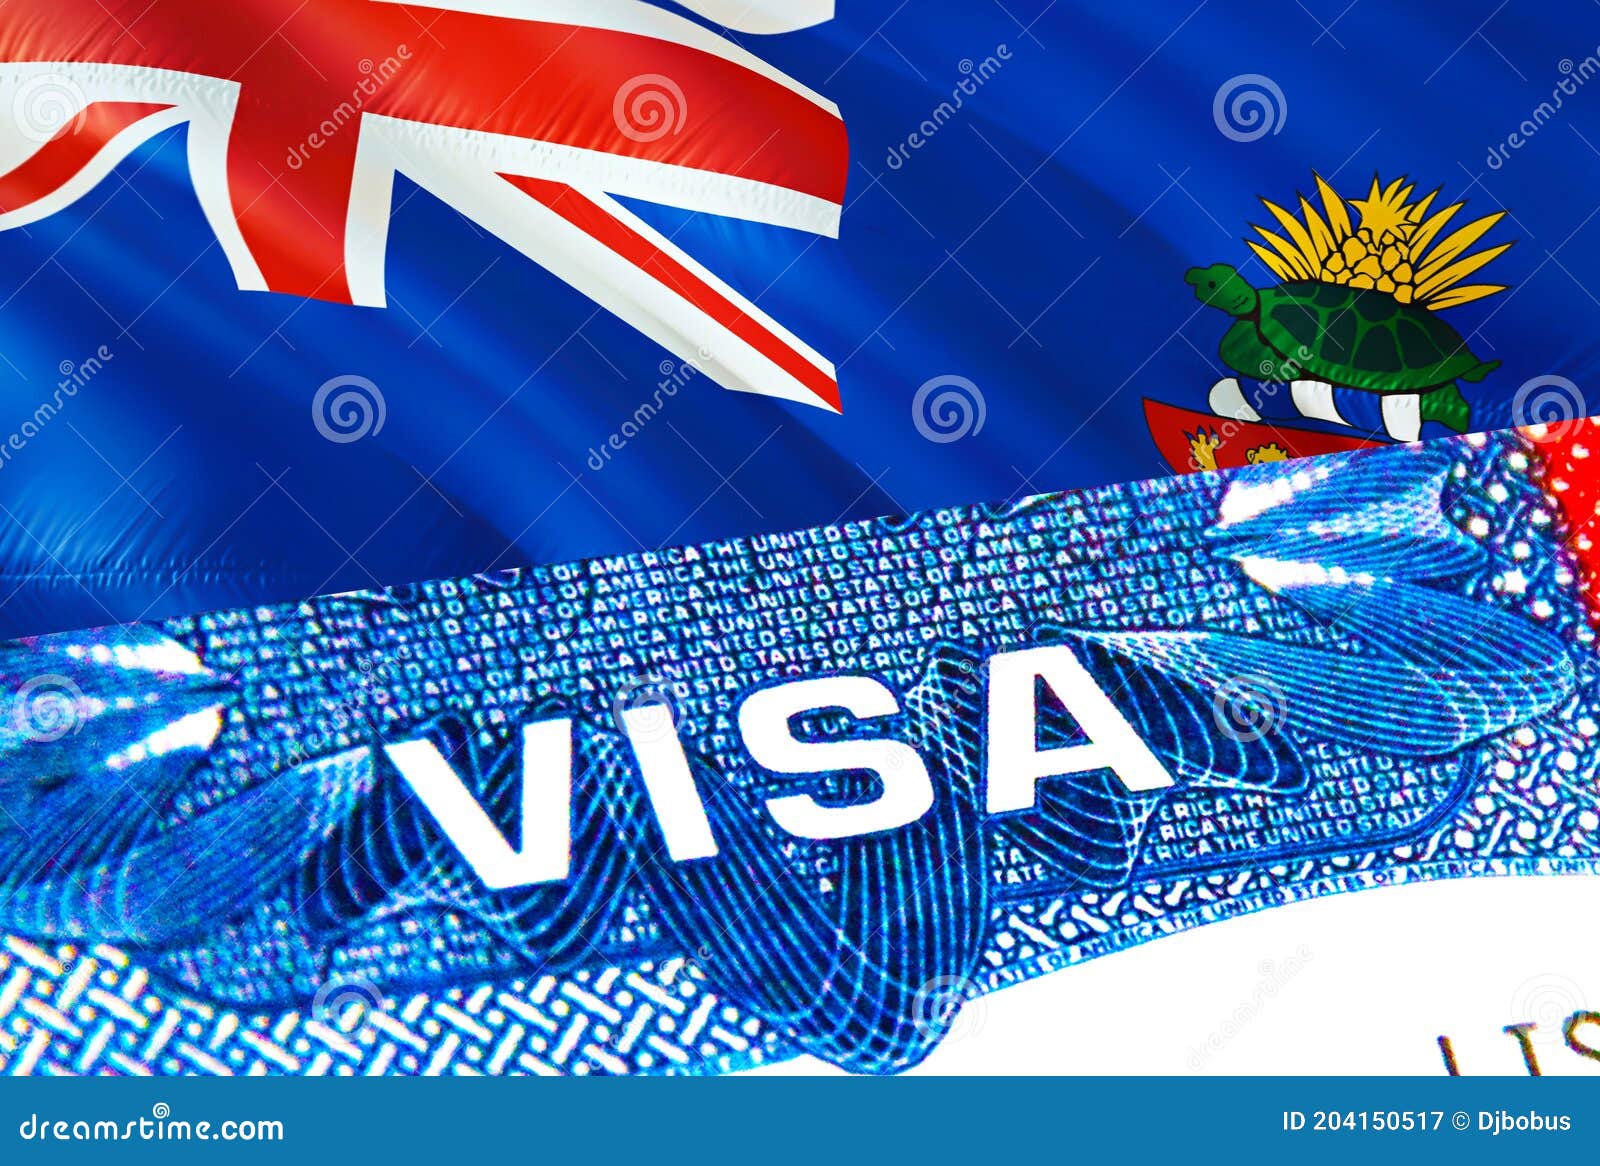 cayman islands travel visa